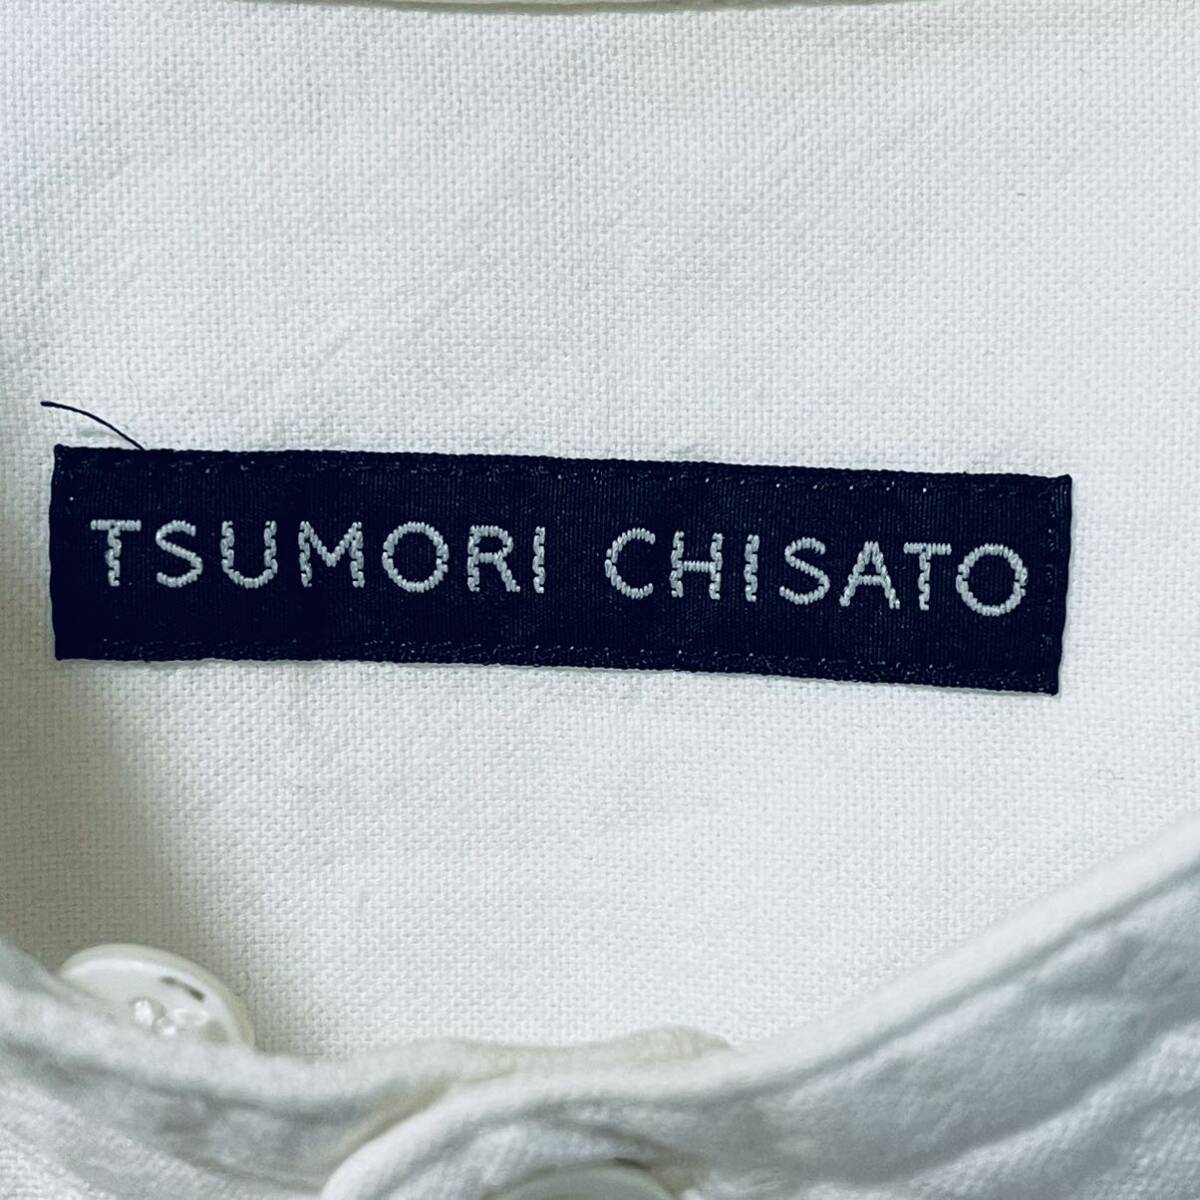 H8062gg TSUMORI CHISATO( Tsumori Chisato ) размер 2(M ранг ) рубашка с коротким рукавом белый голубой женский хлопок 100% no color рубашка модный 